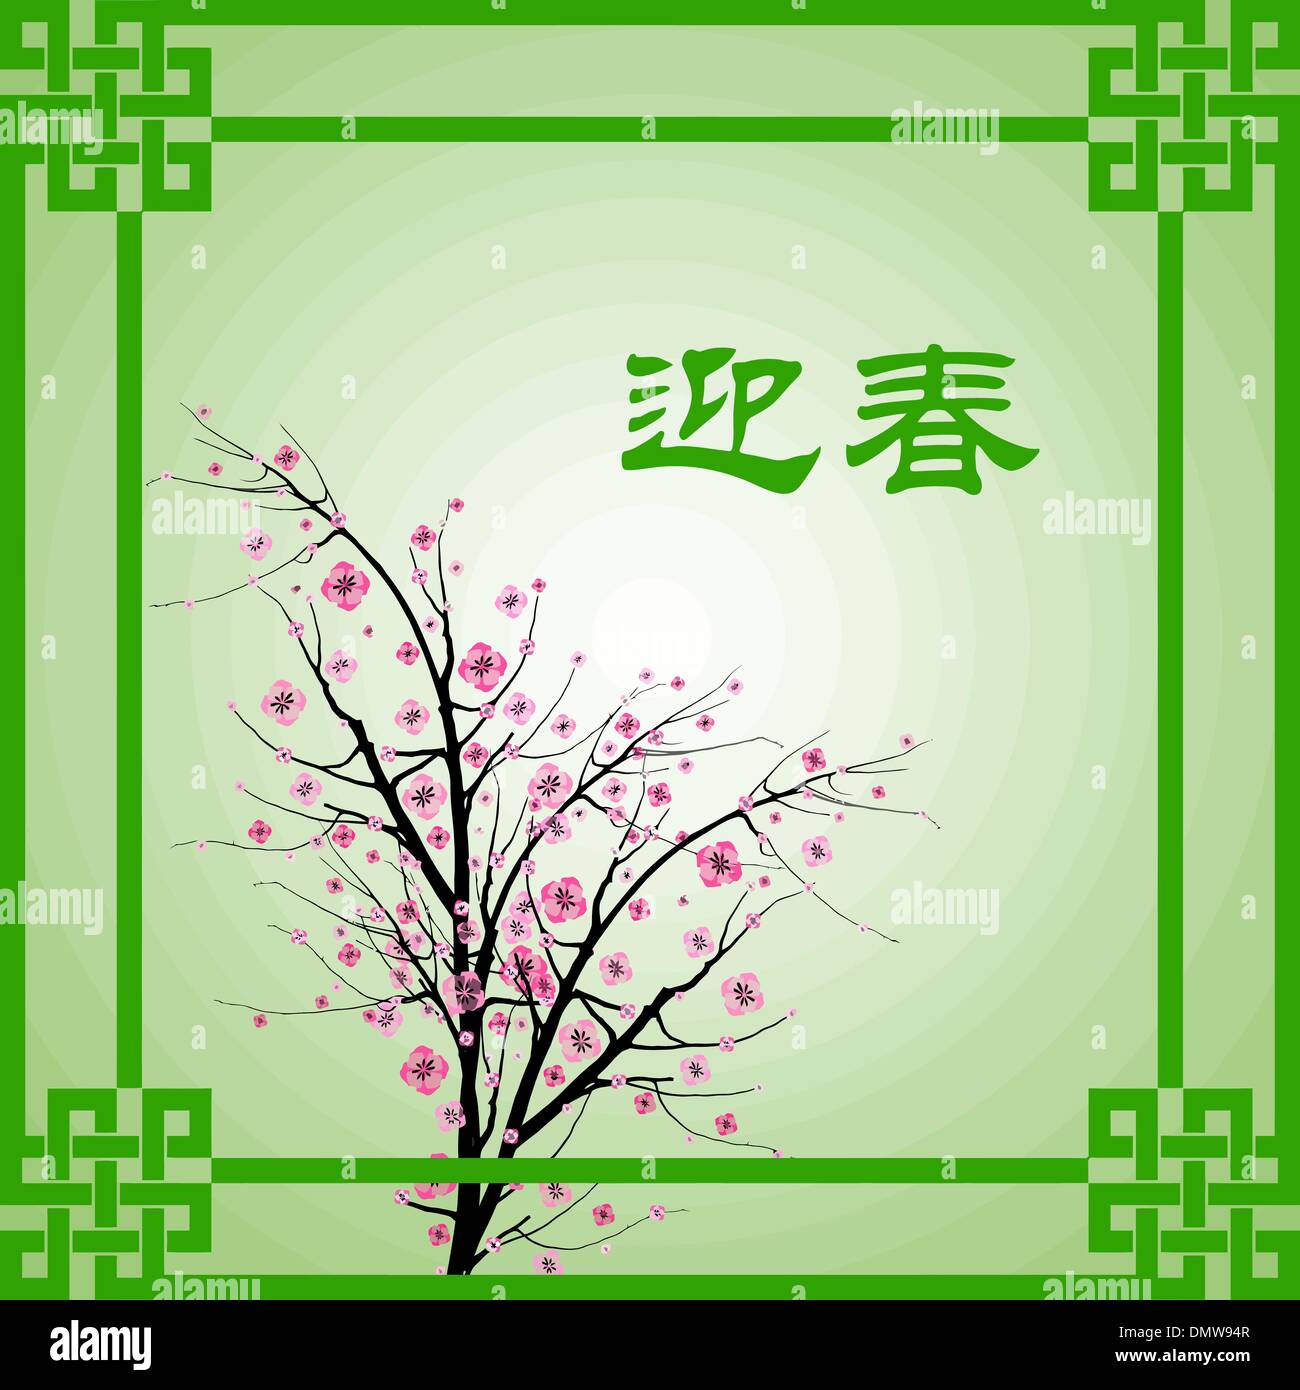 chinese-new-year-stock-vector-image-art-alamy